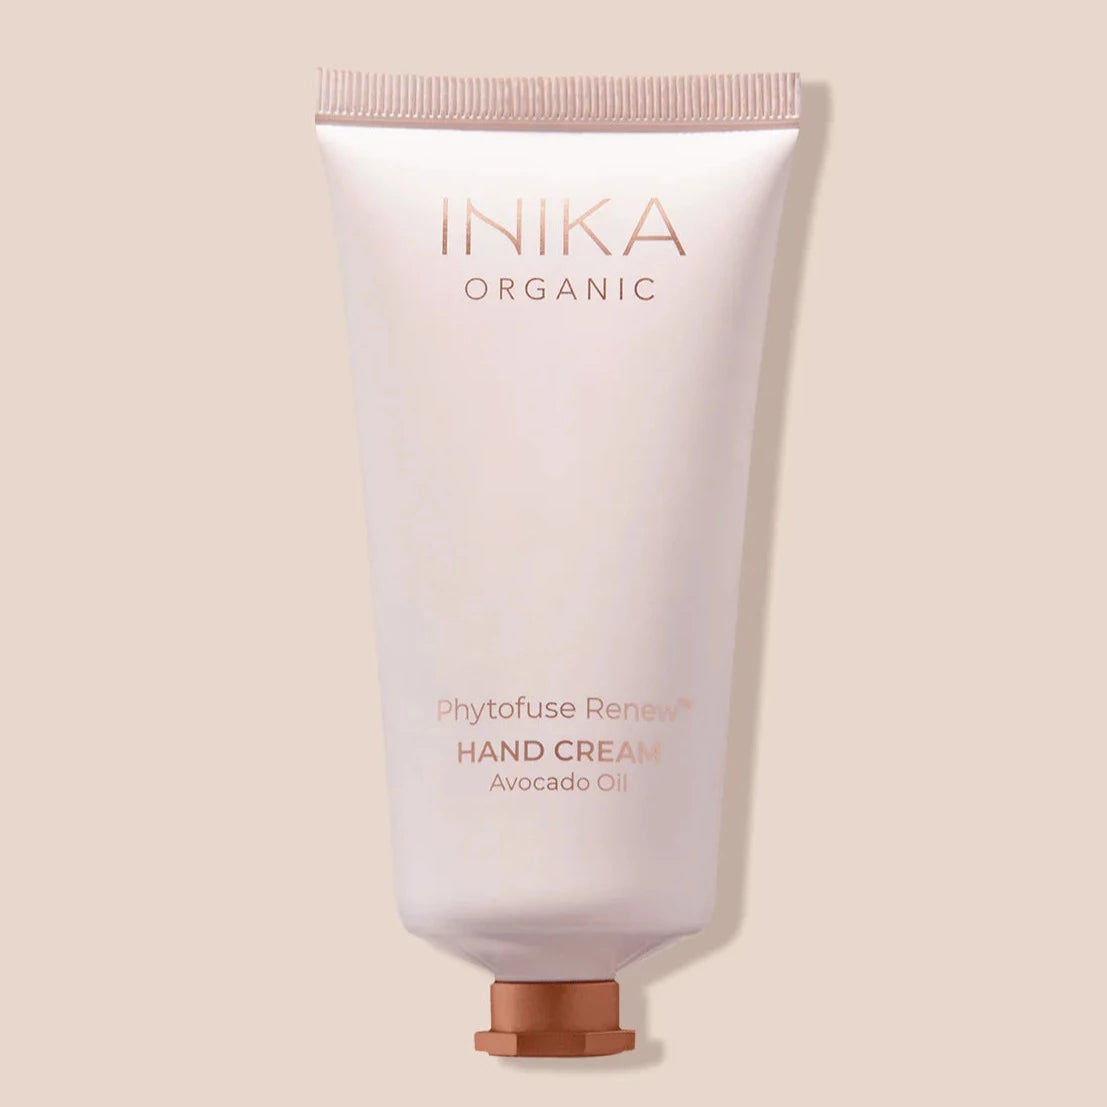 INIKA Organic Phytofuse Renew Hand Cream | Marga Jacobs